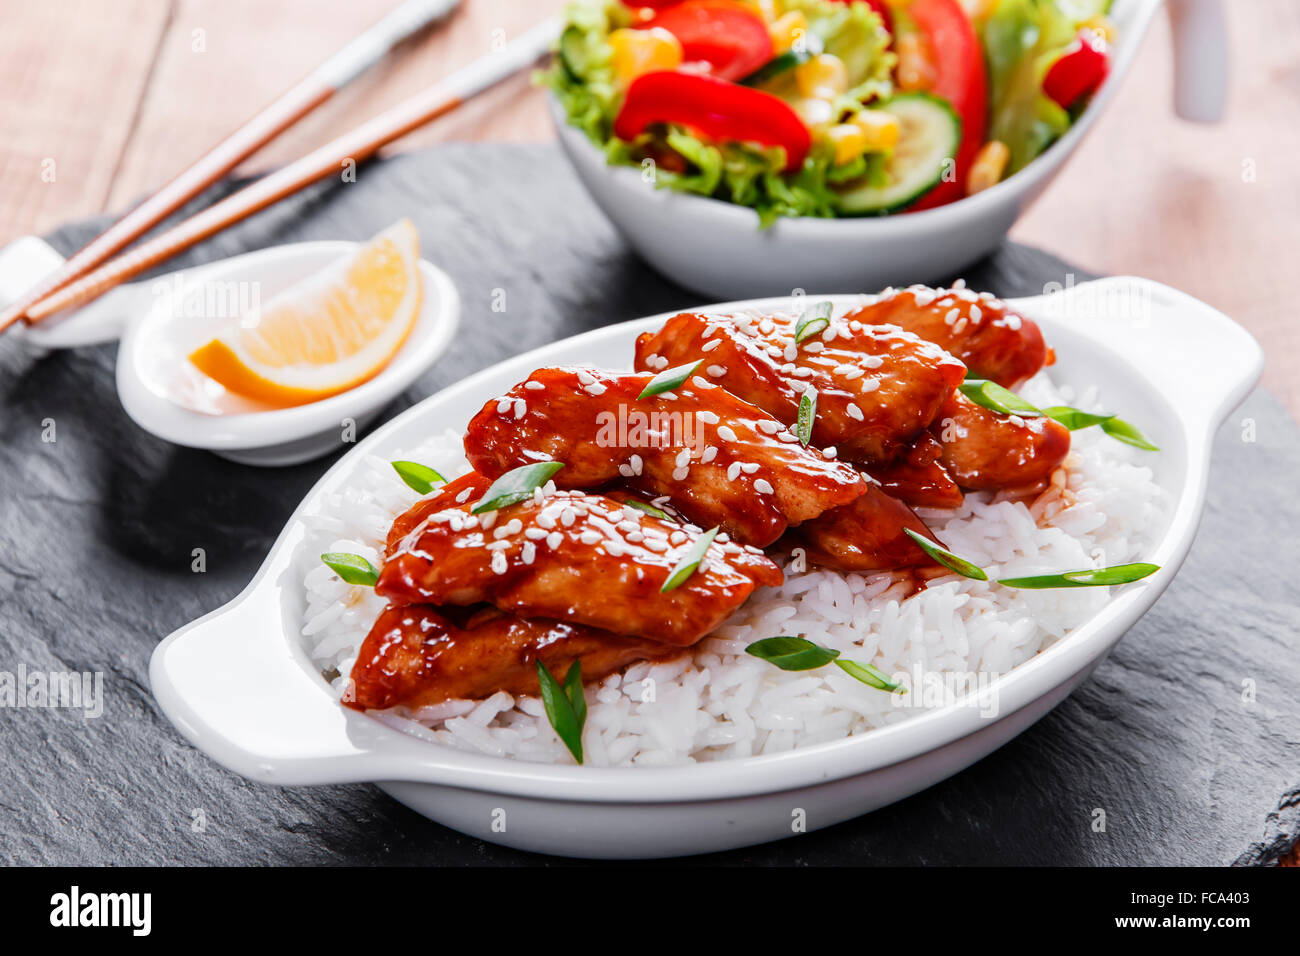 Teriyaki chicken with rice and salad Stock Photo